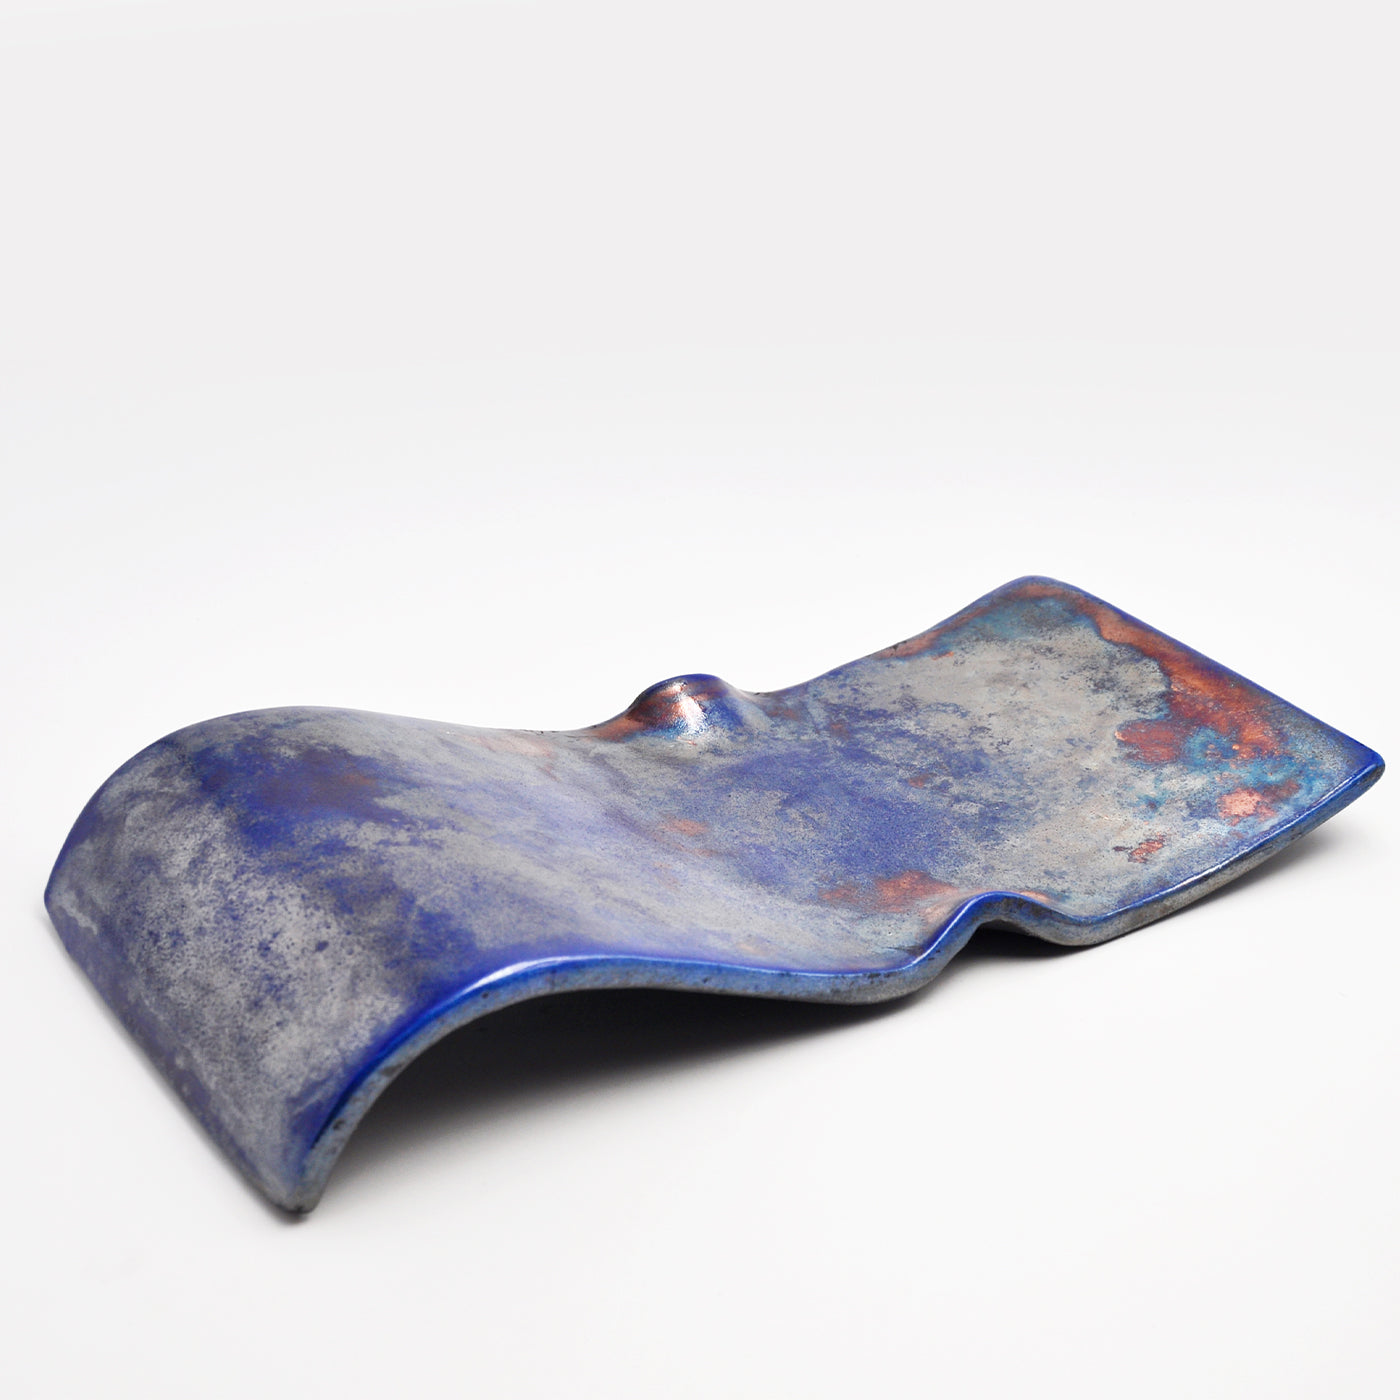 Onda Piccola Coppery/Blue Centerpiece Plate by Nino Basso - Alternative view 4